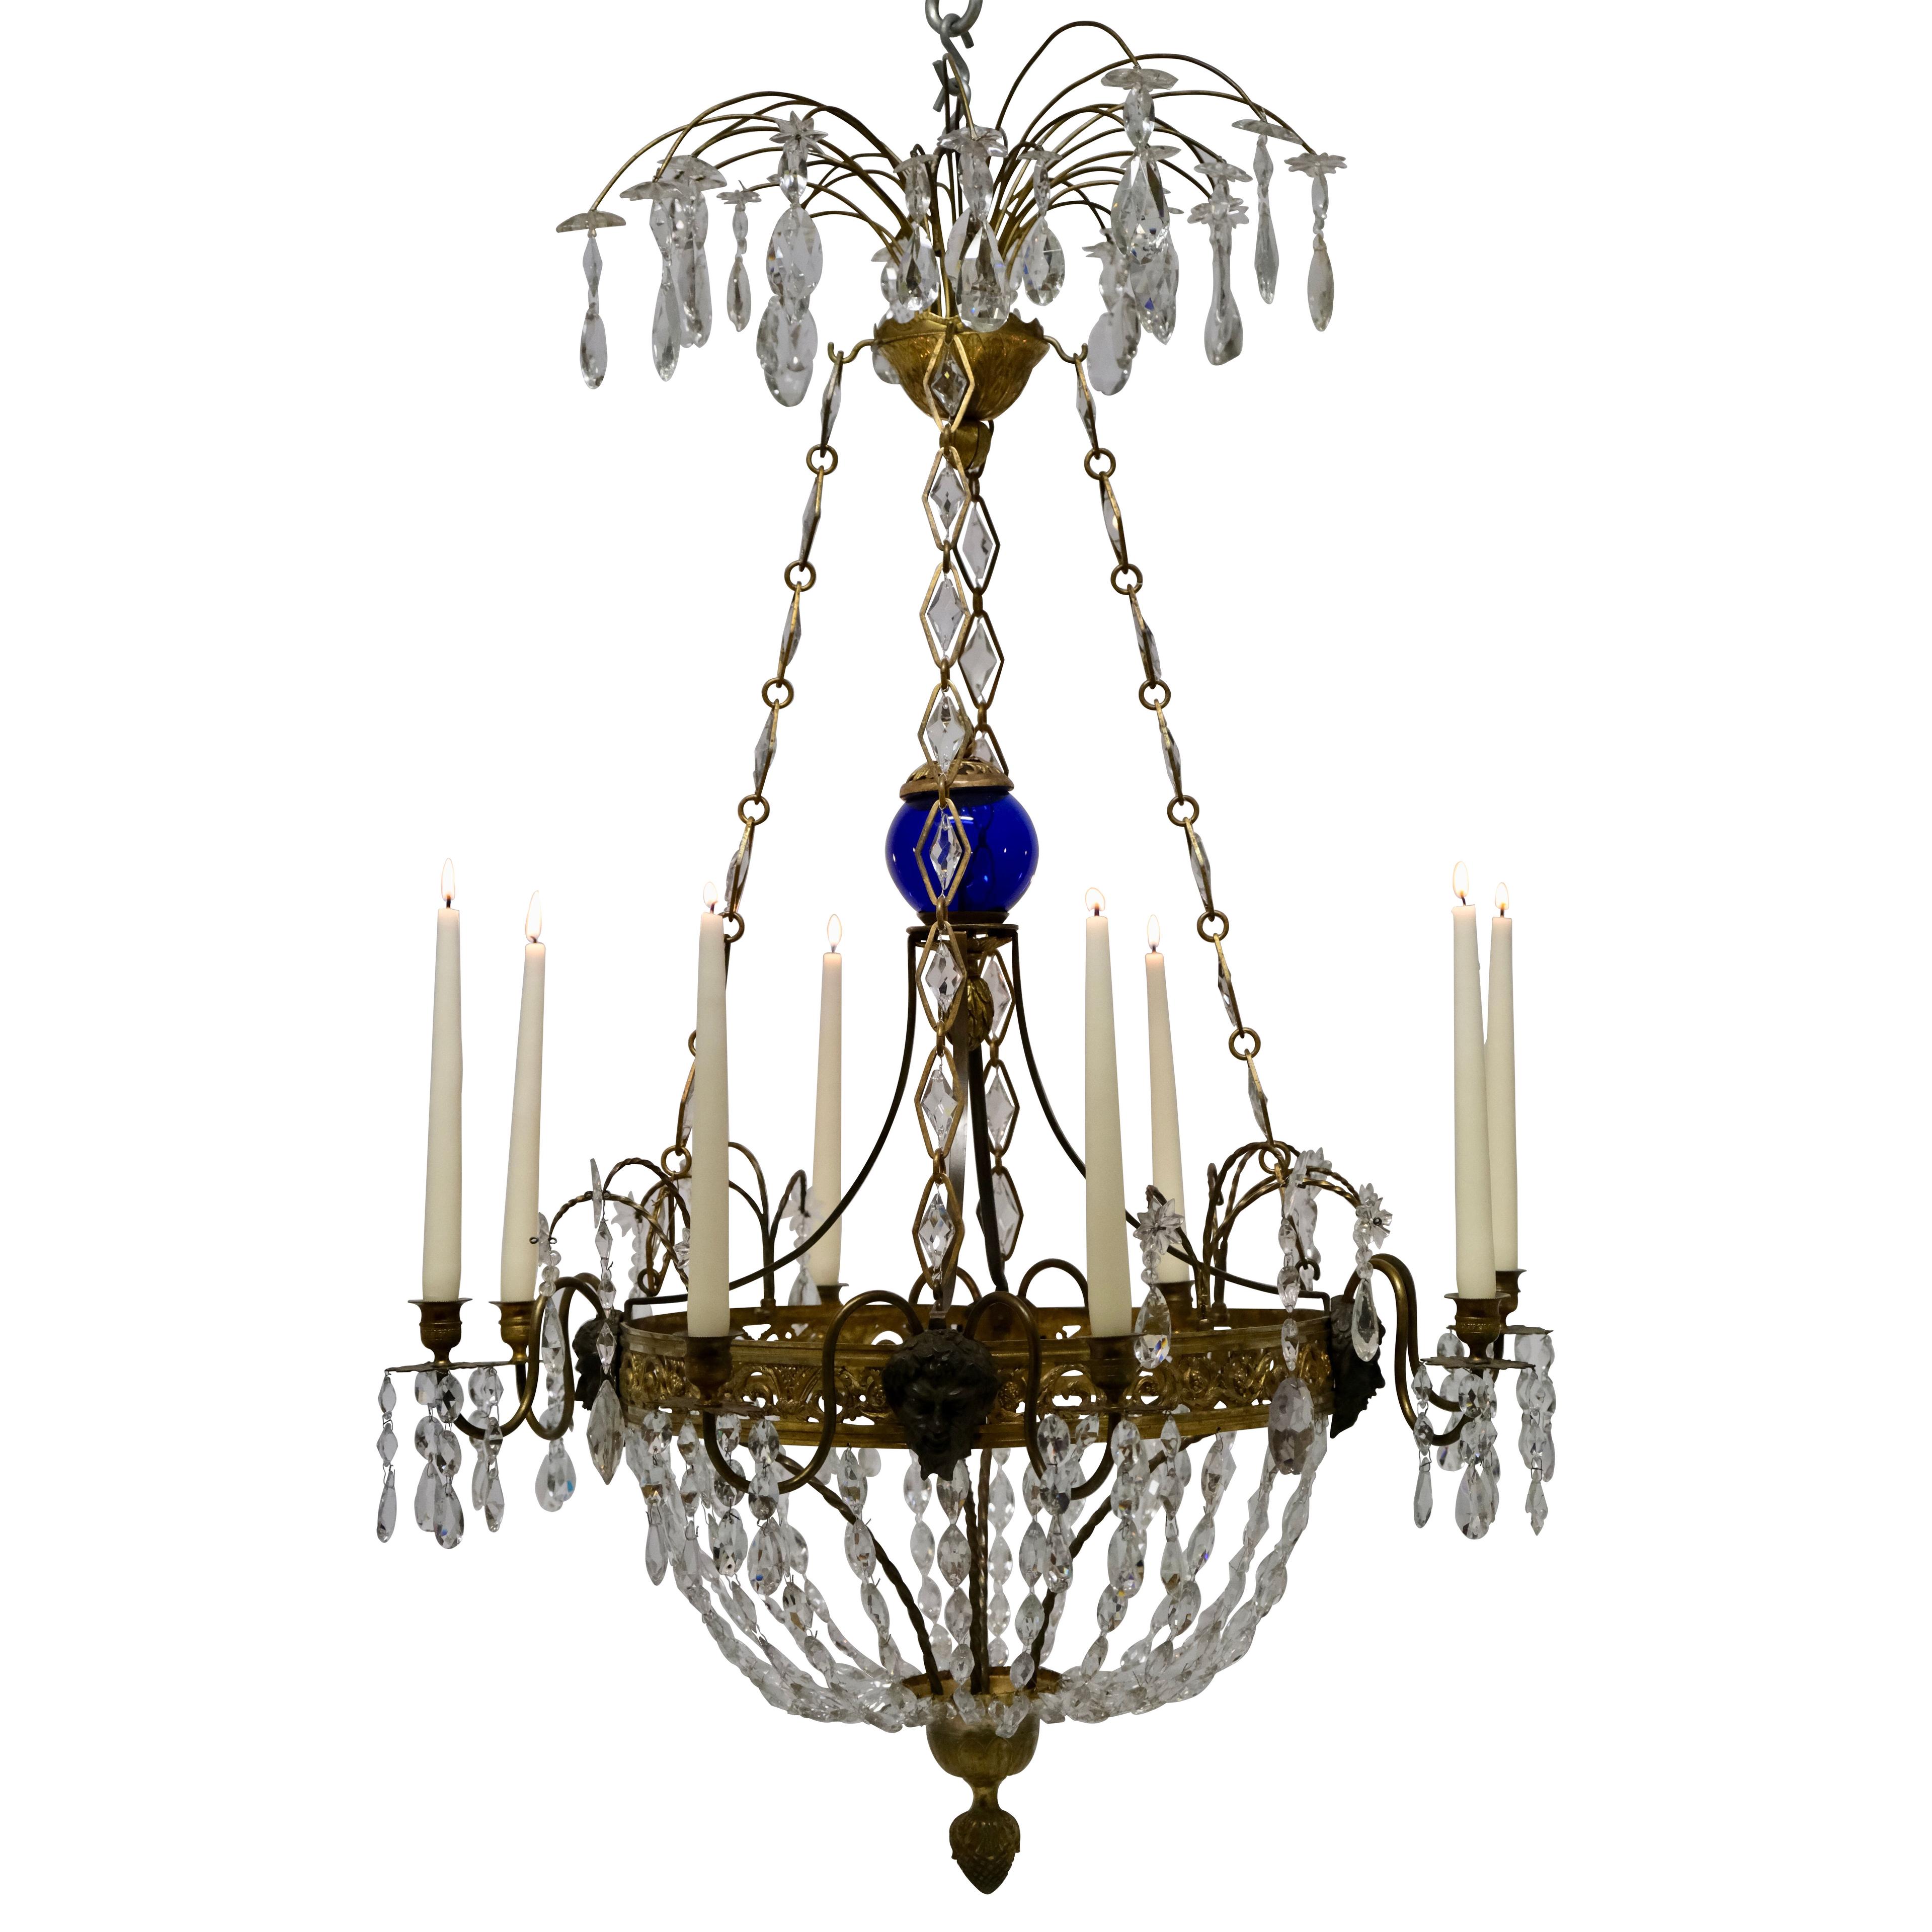 Russian chandelier, early 19th c.